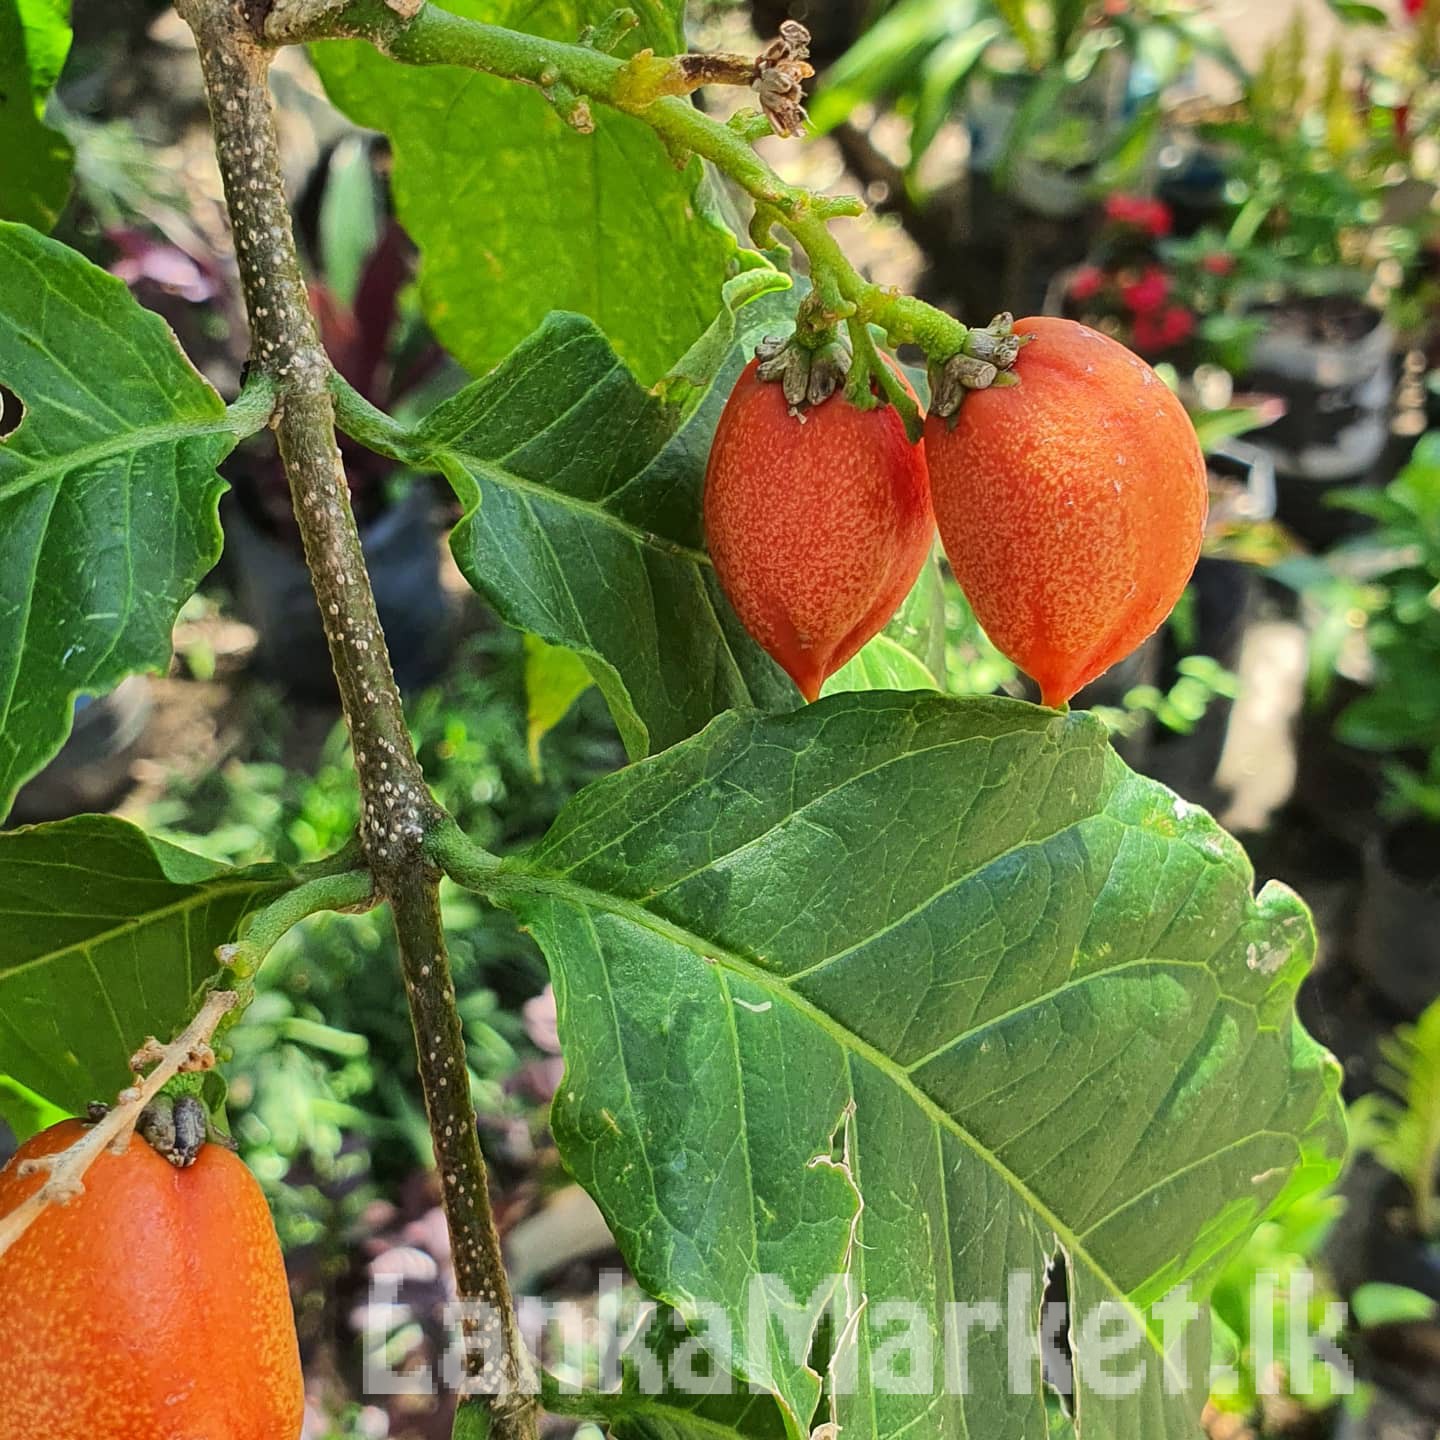 Apricot plants